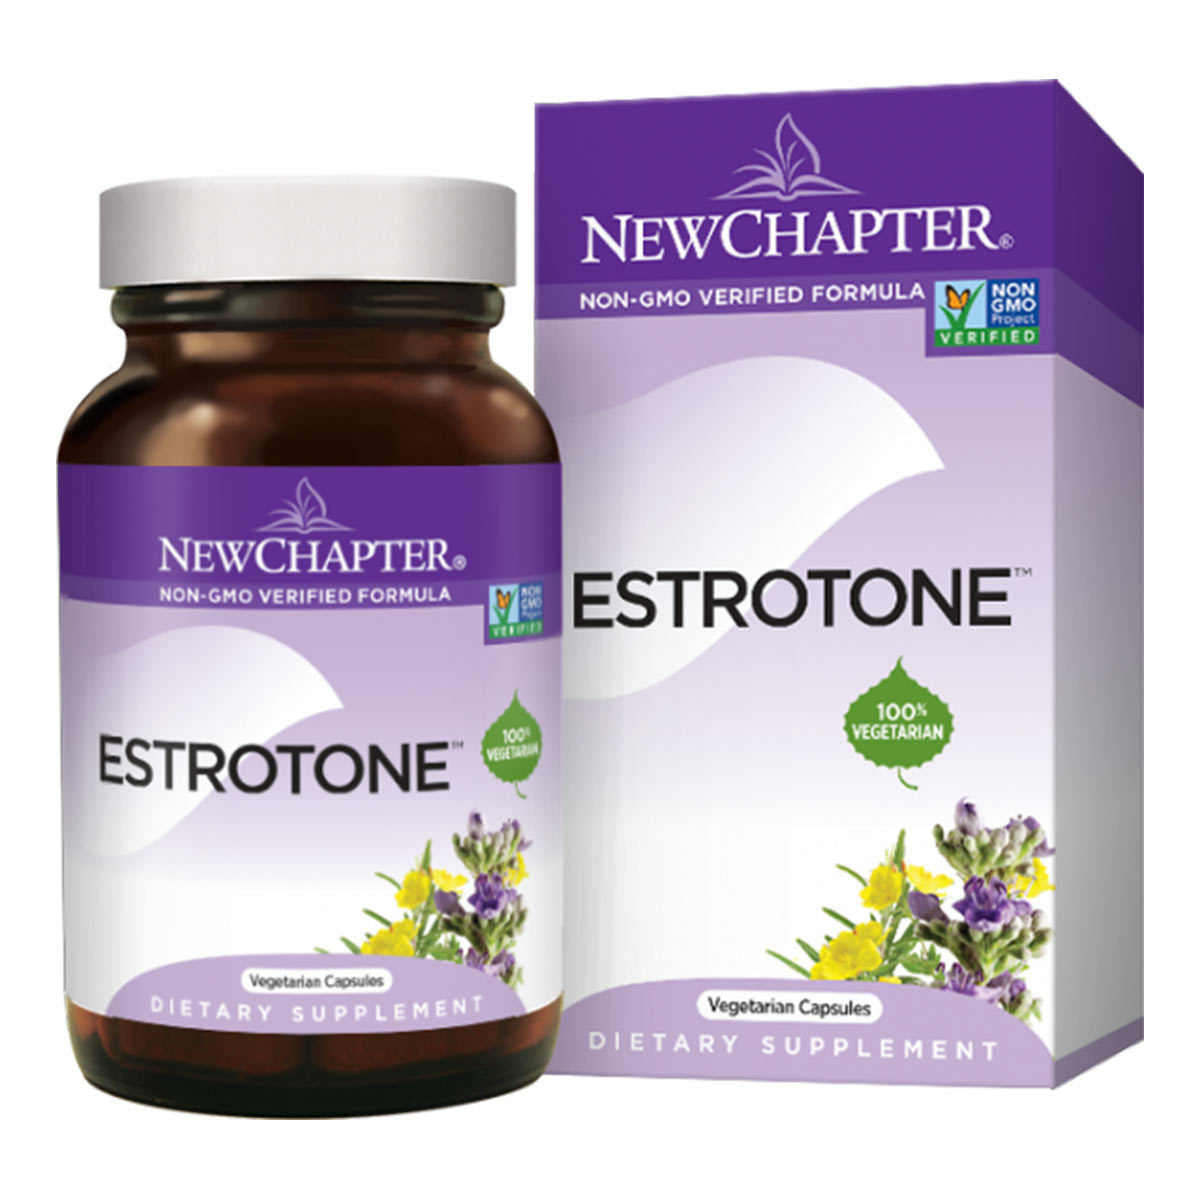 Primary image of Estrotone